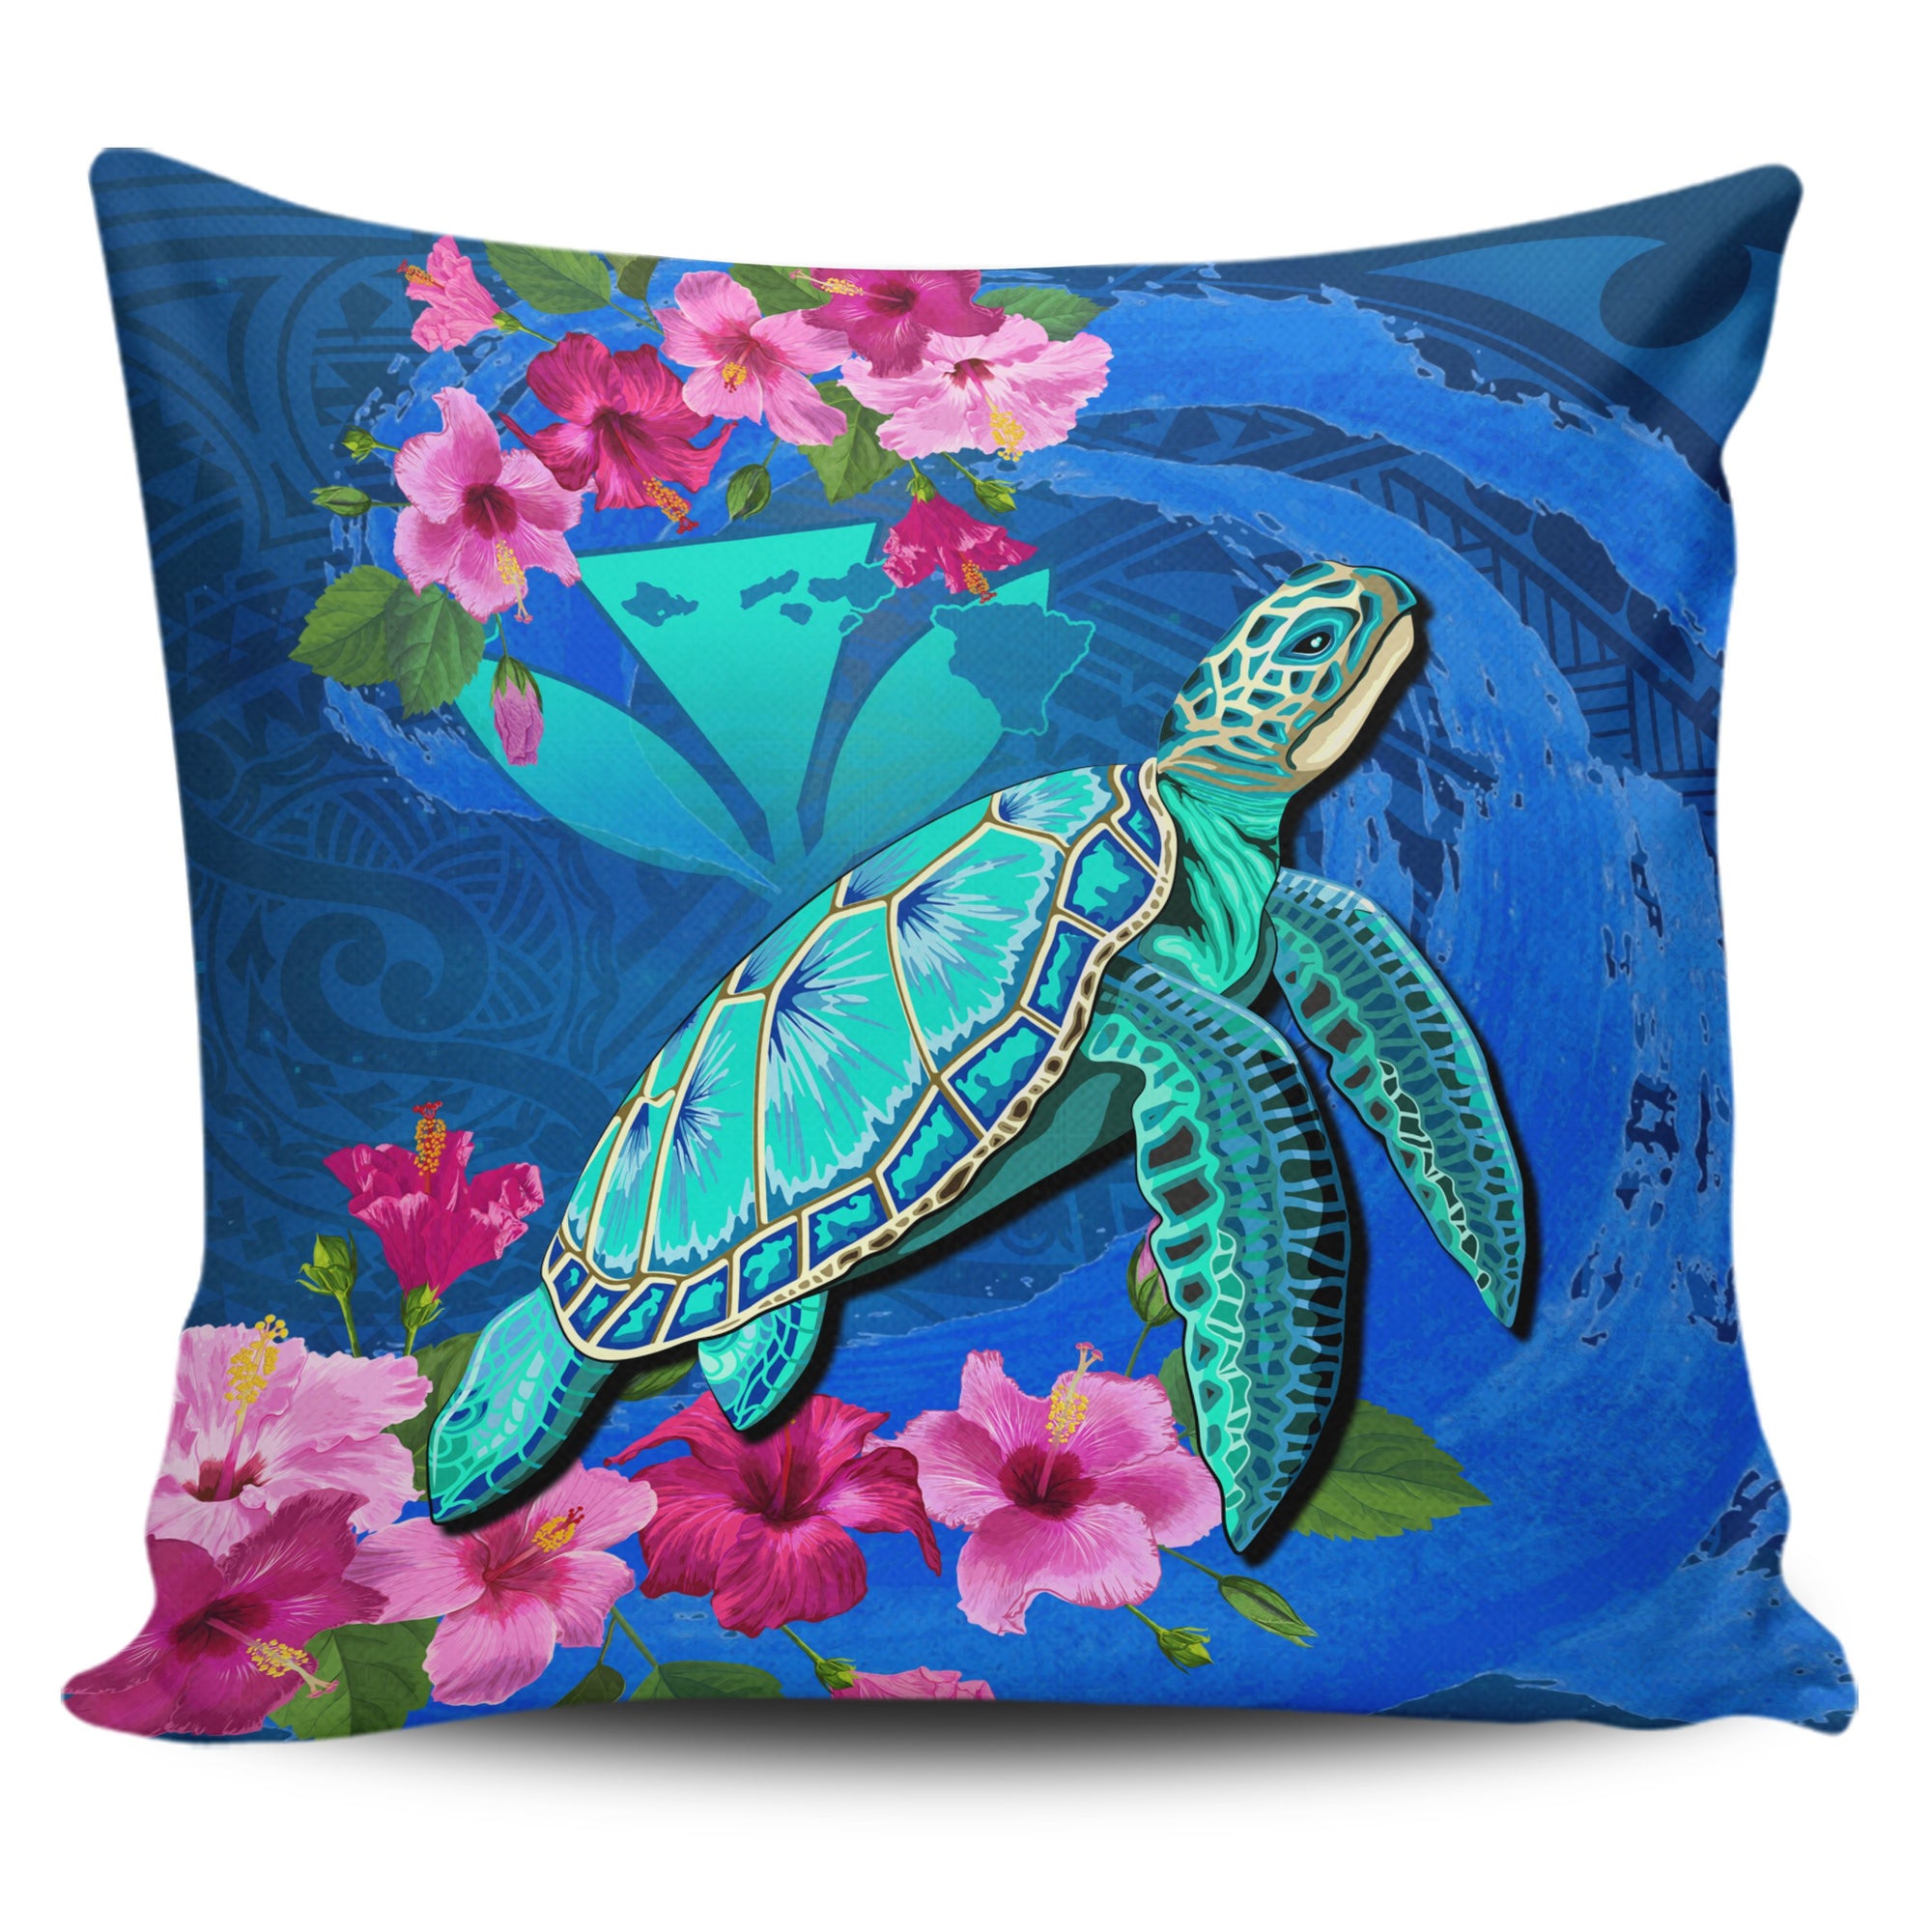 Hawaii Honu Aumakua Sea Hibiscus Pillow Cover - Nin Style One Size Blue - Polynesian Pride